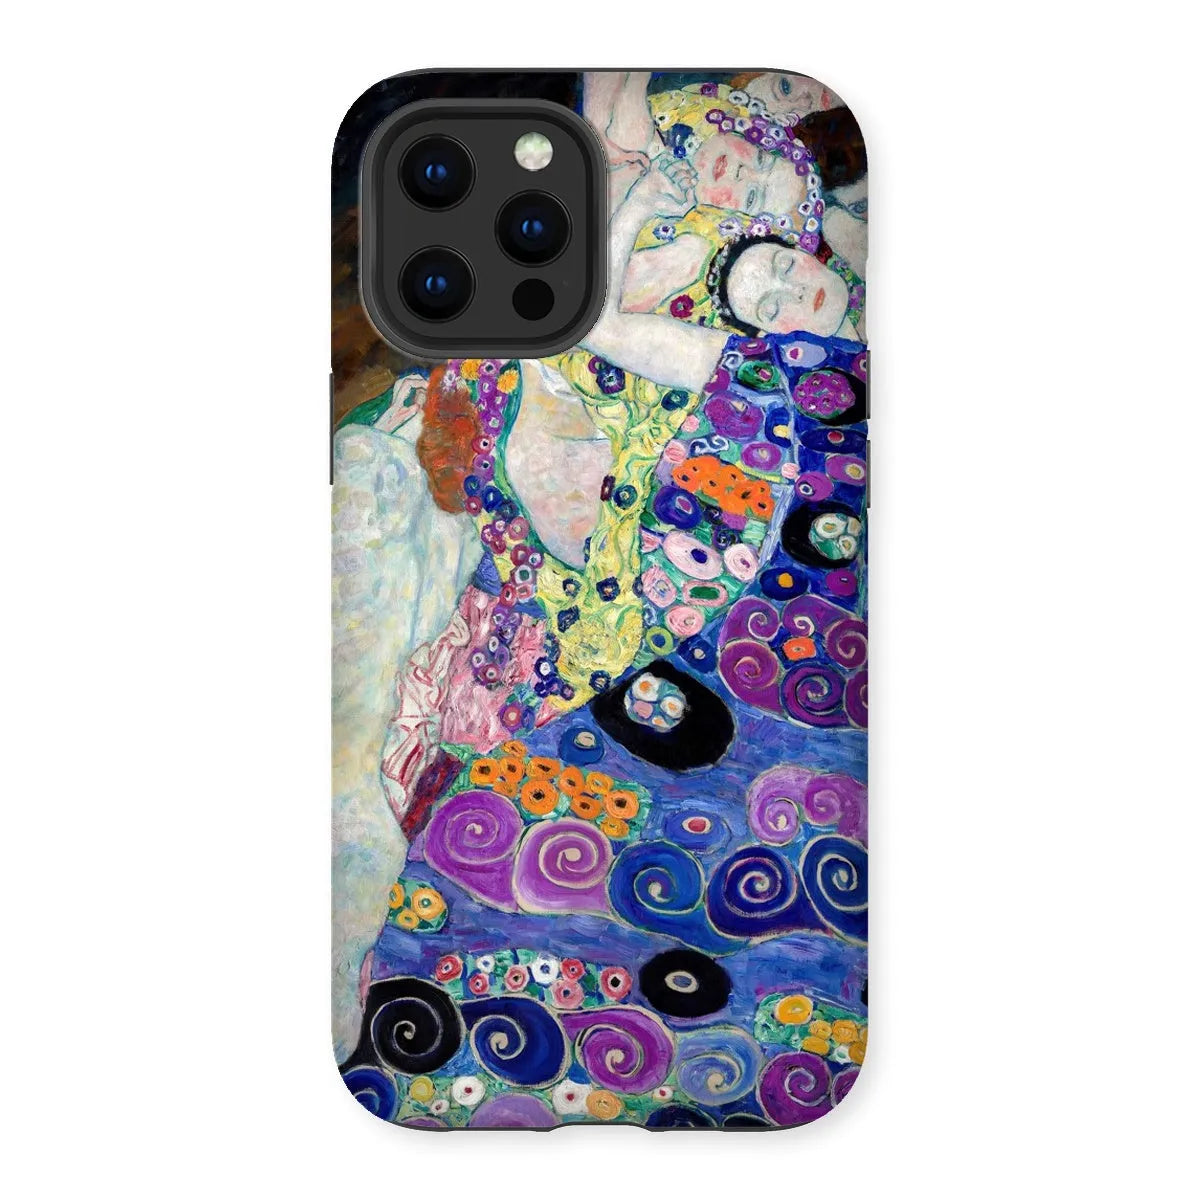 The Virgin - Vienna Secession Phone Case - Gustav Klimt - Iphone 12 Pro Max / Matte - Mobile Phone Cases - Aesthetic Art